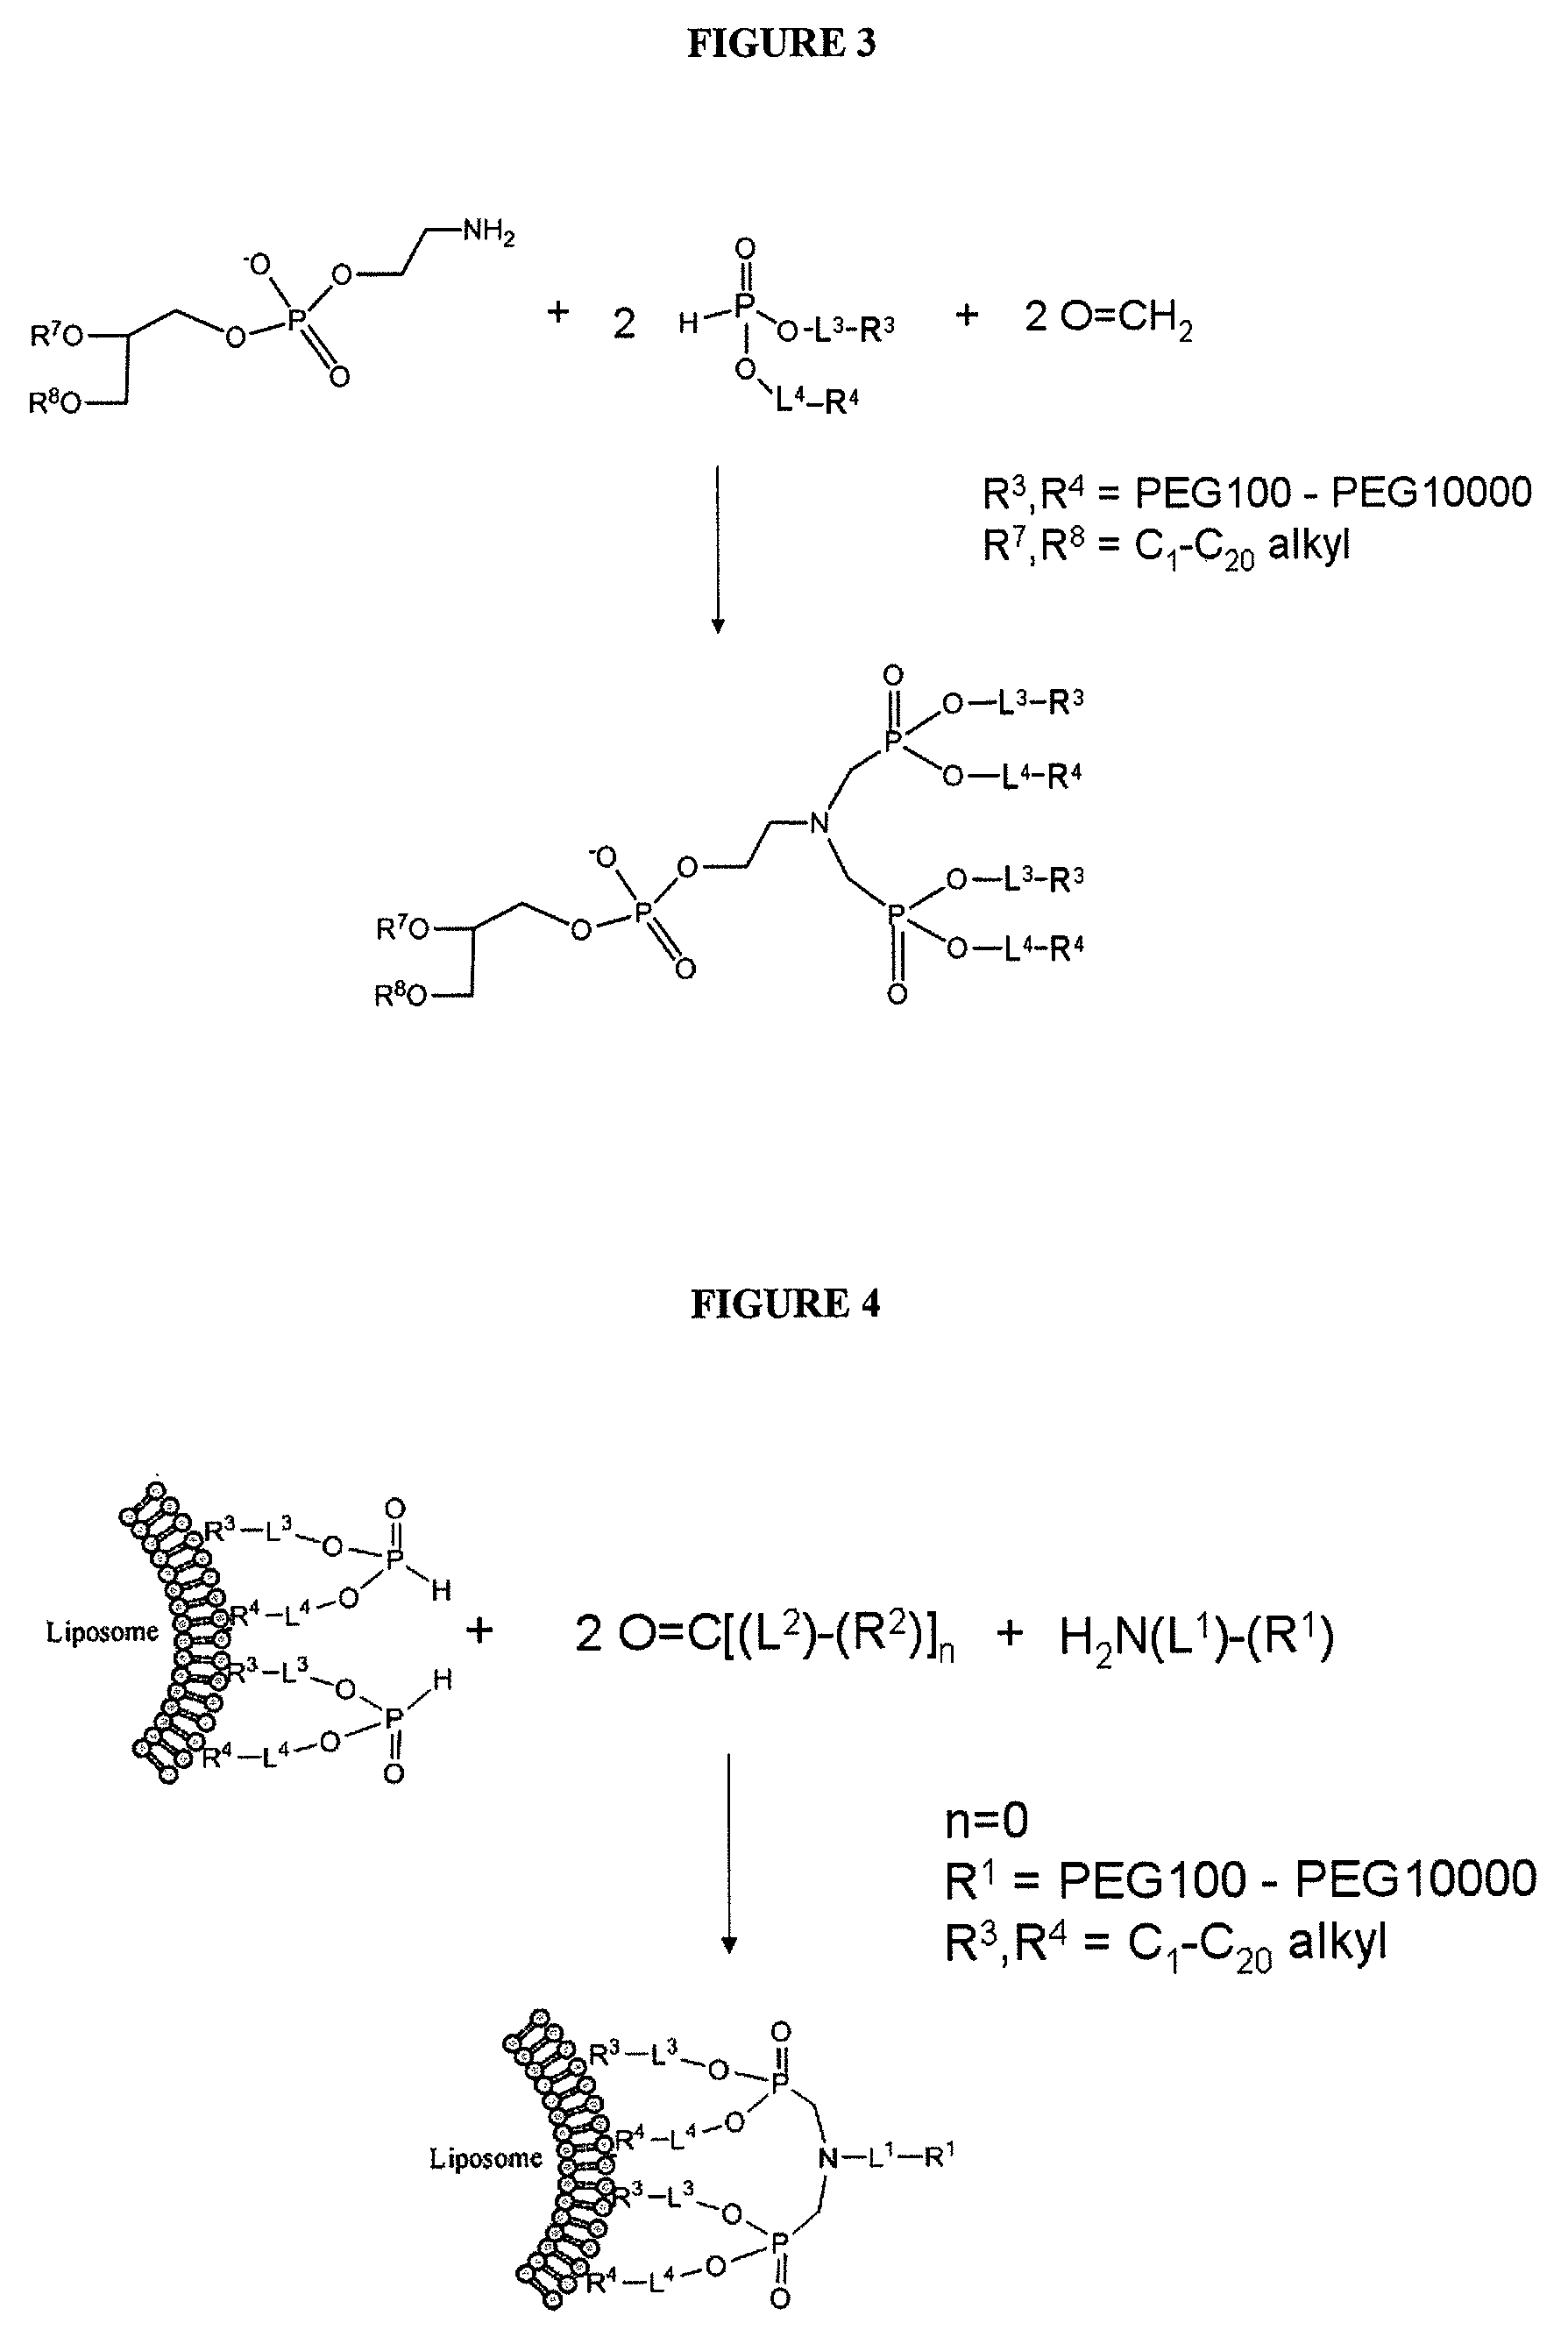 Nanoparticle PEG modification with H-phosphonates